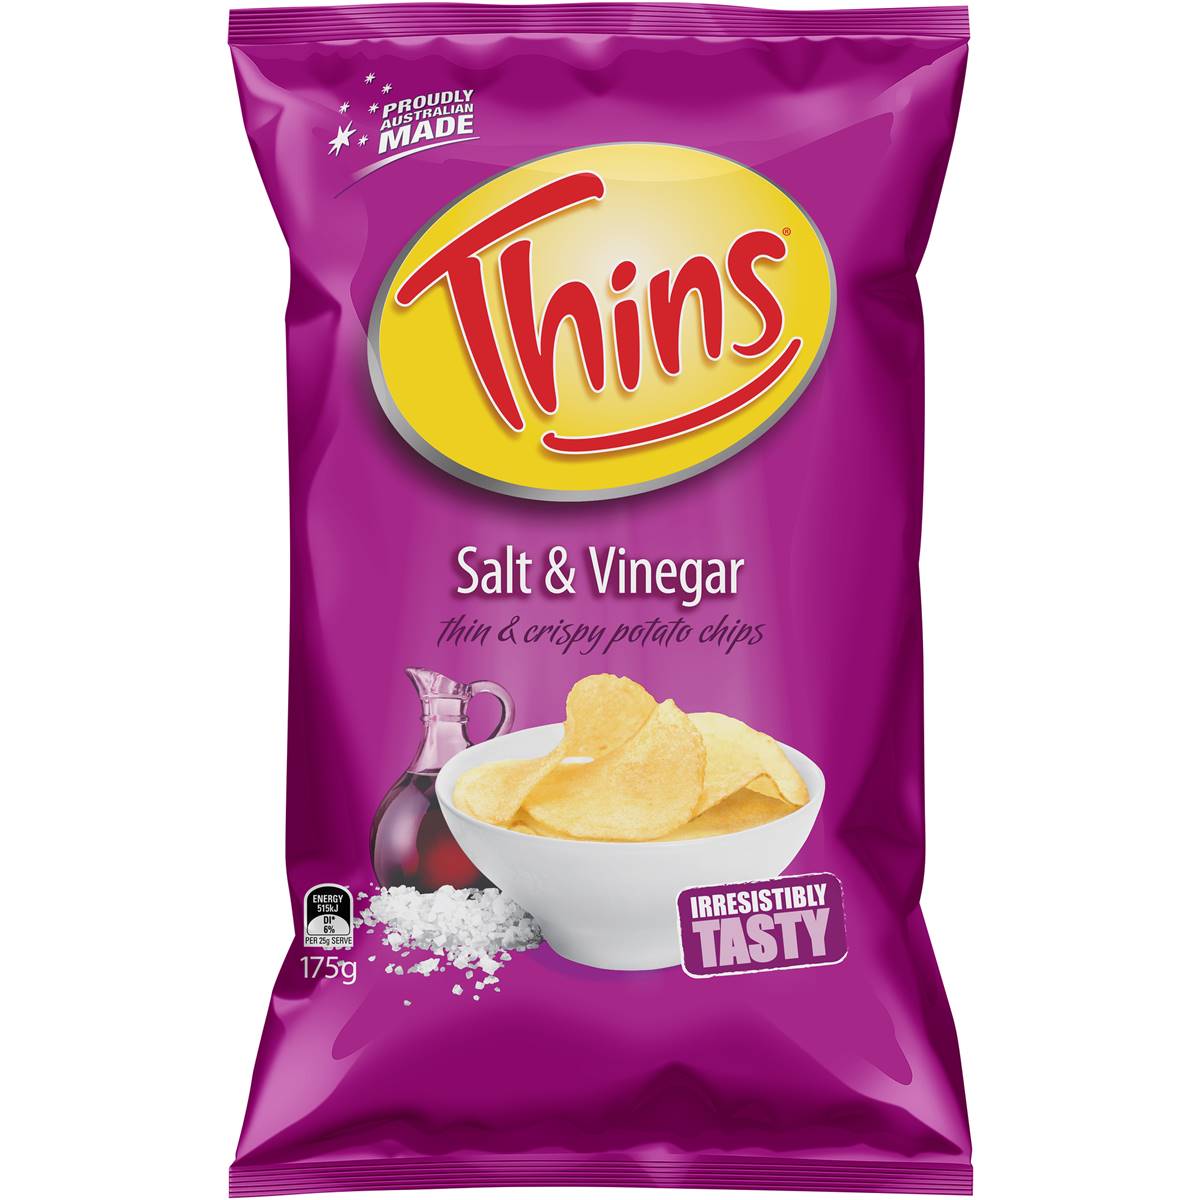 Calories in Thins Chips Salt & Vinegar